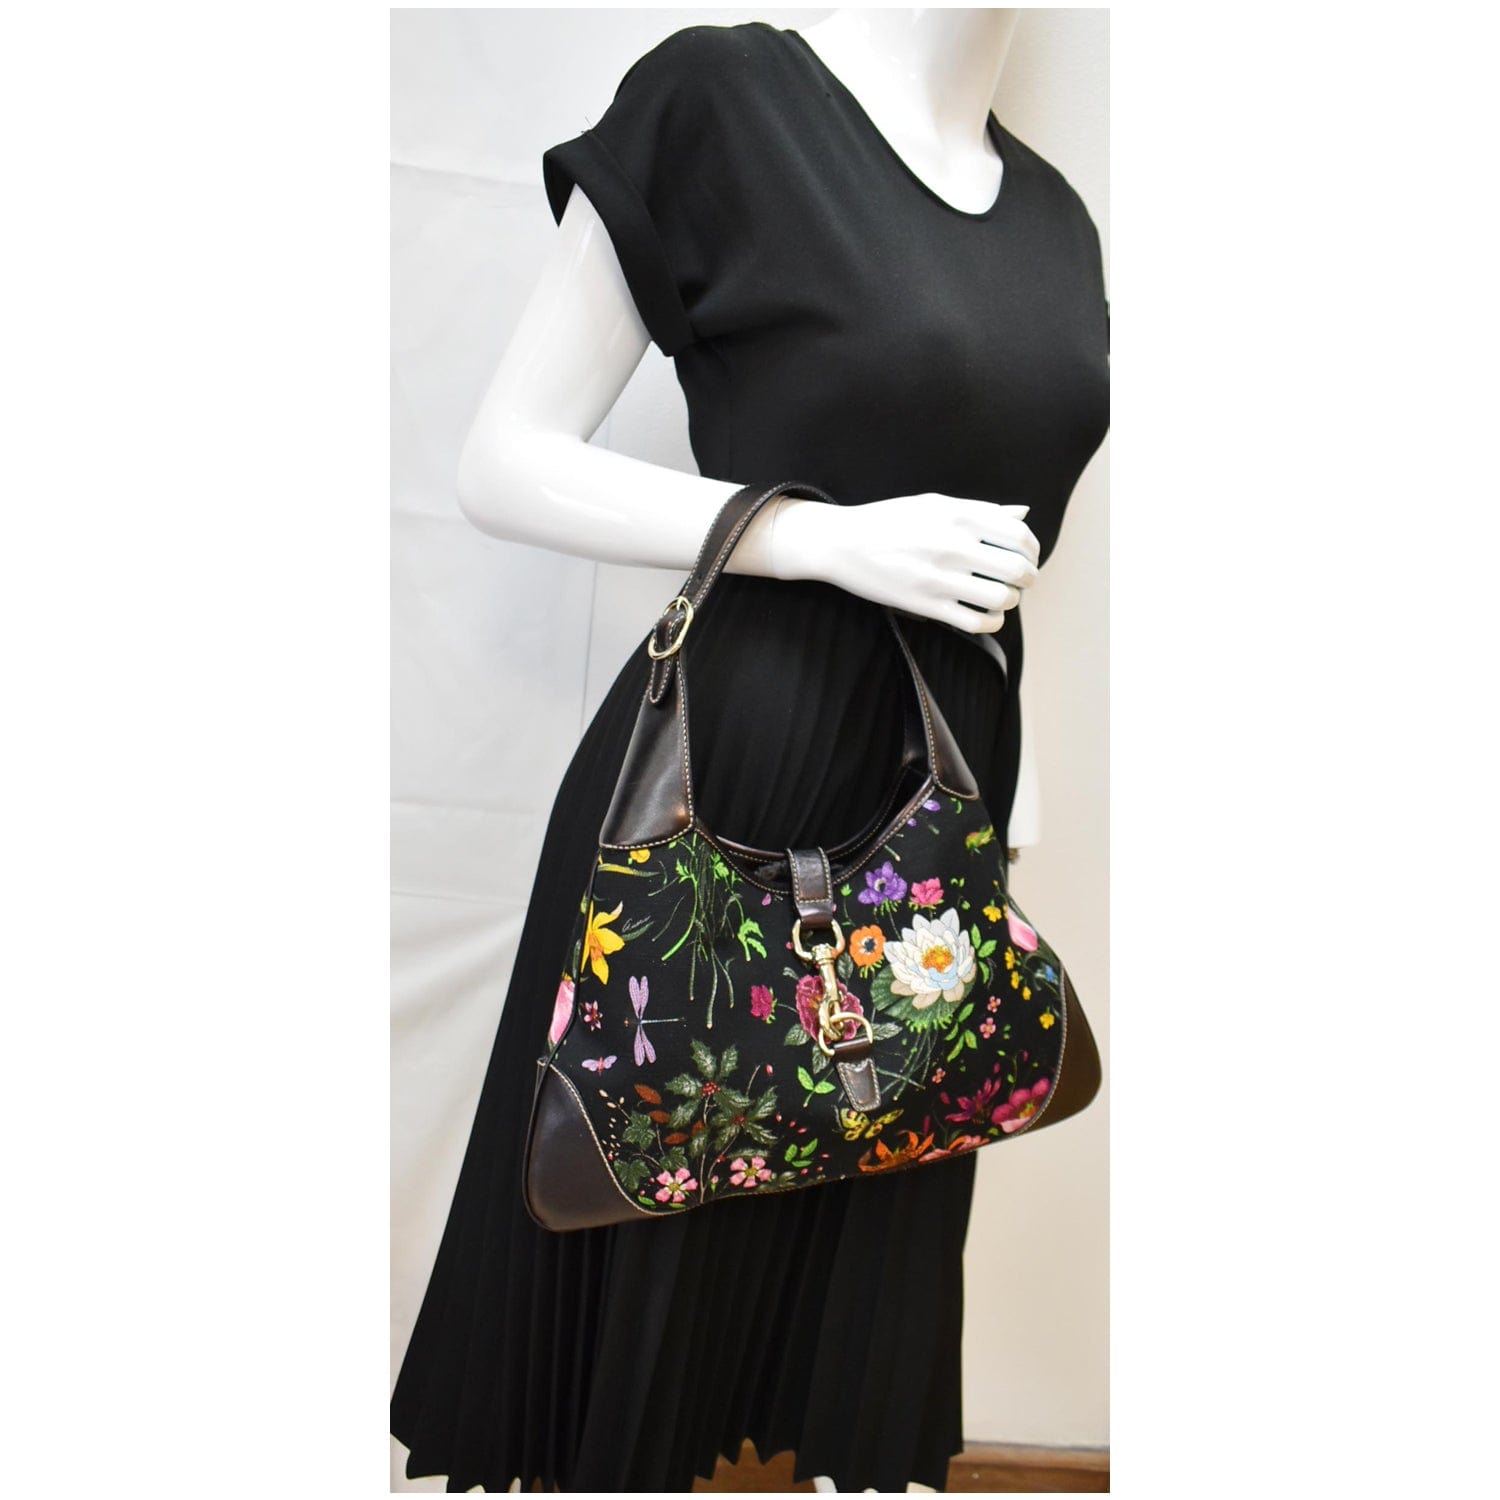 Jackie O Gucci bag  Gucci jackie bag, Elegant feminine seductive style, Gucci  bag